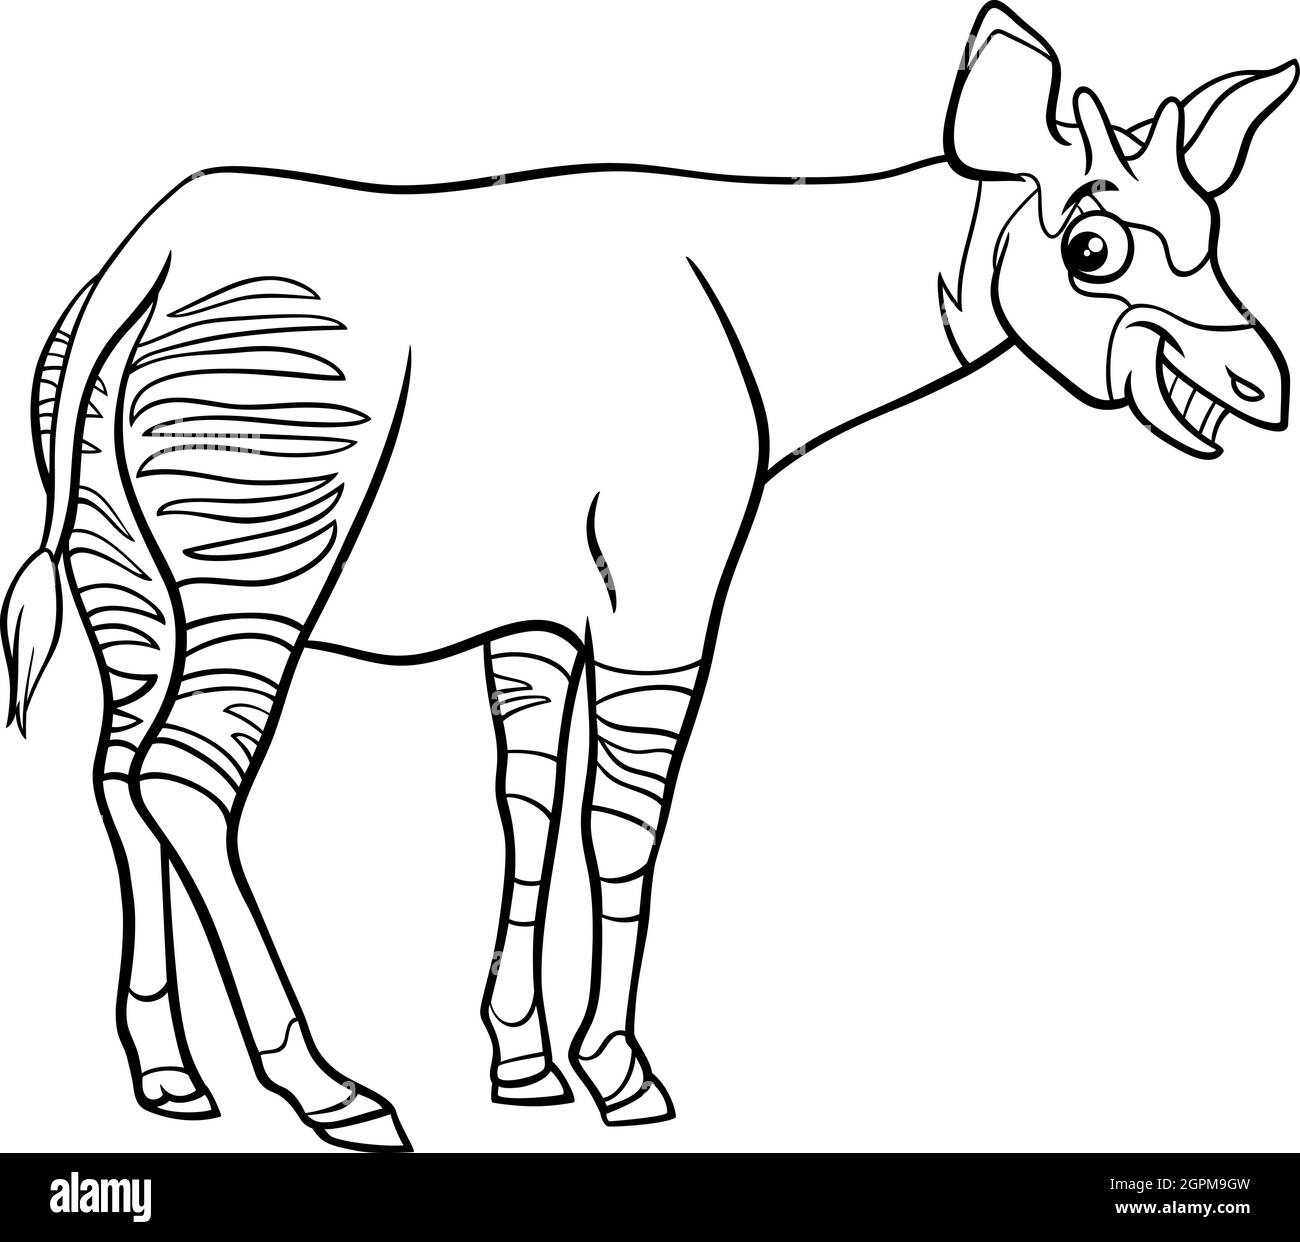 cartoon okapi comic animal character coloring book page Stock Vector